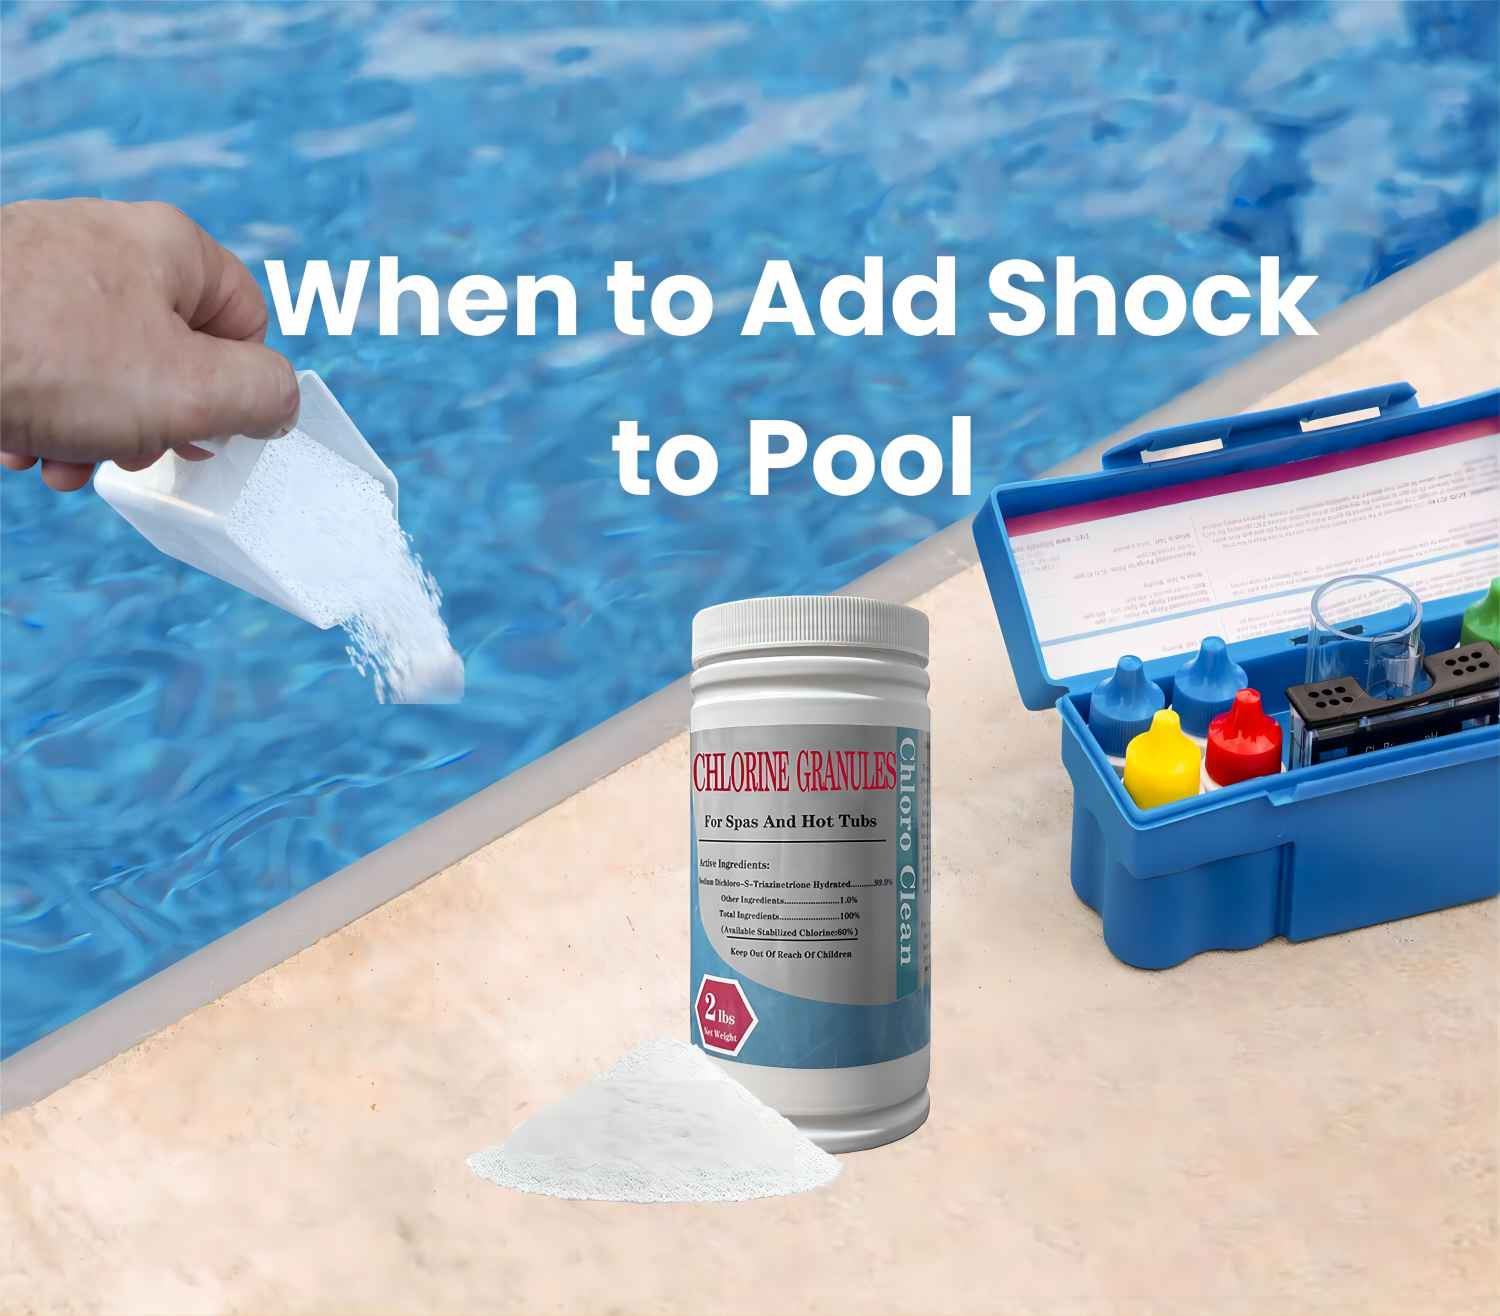 Add Shock to Pool